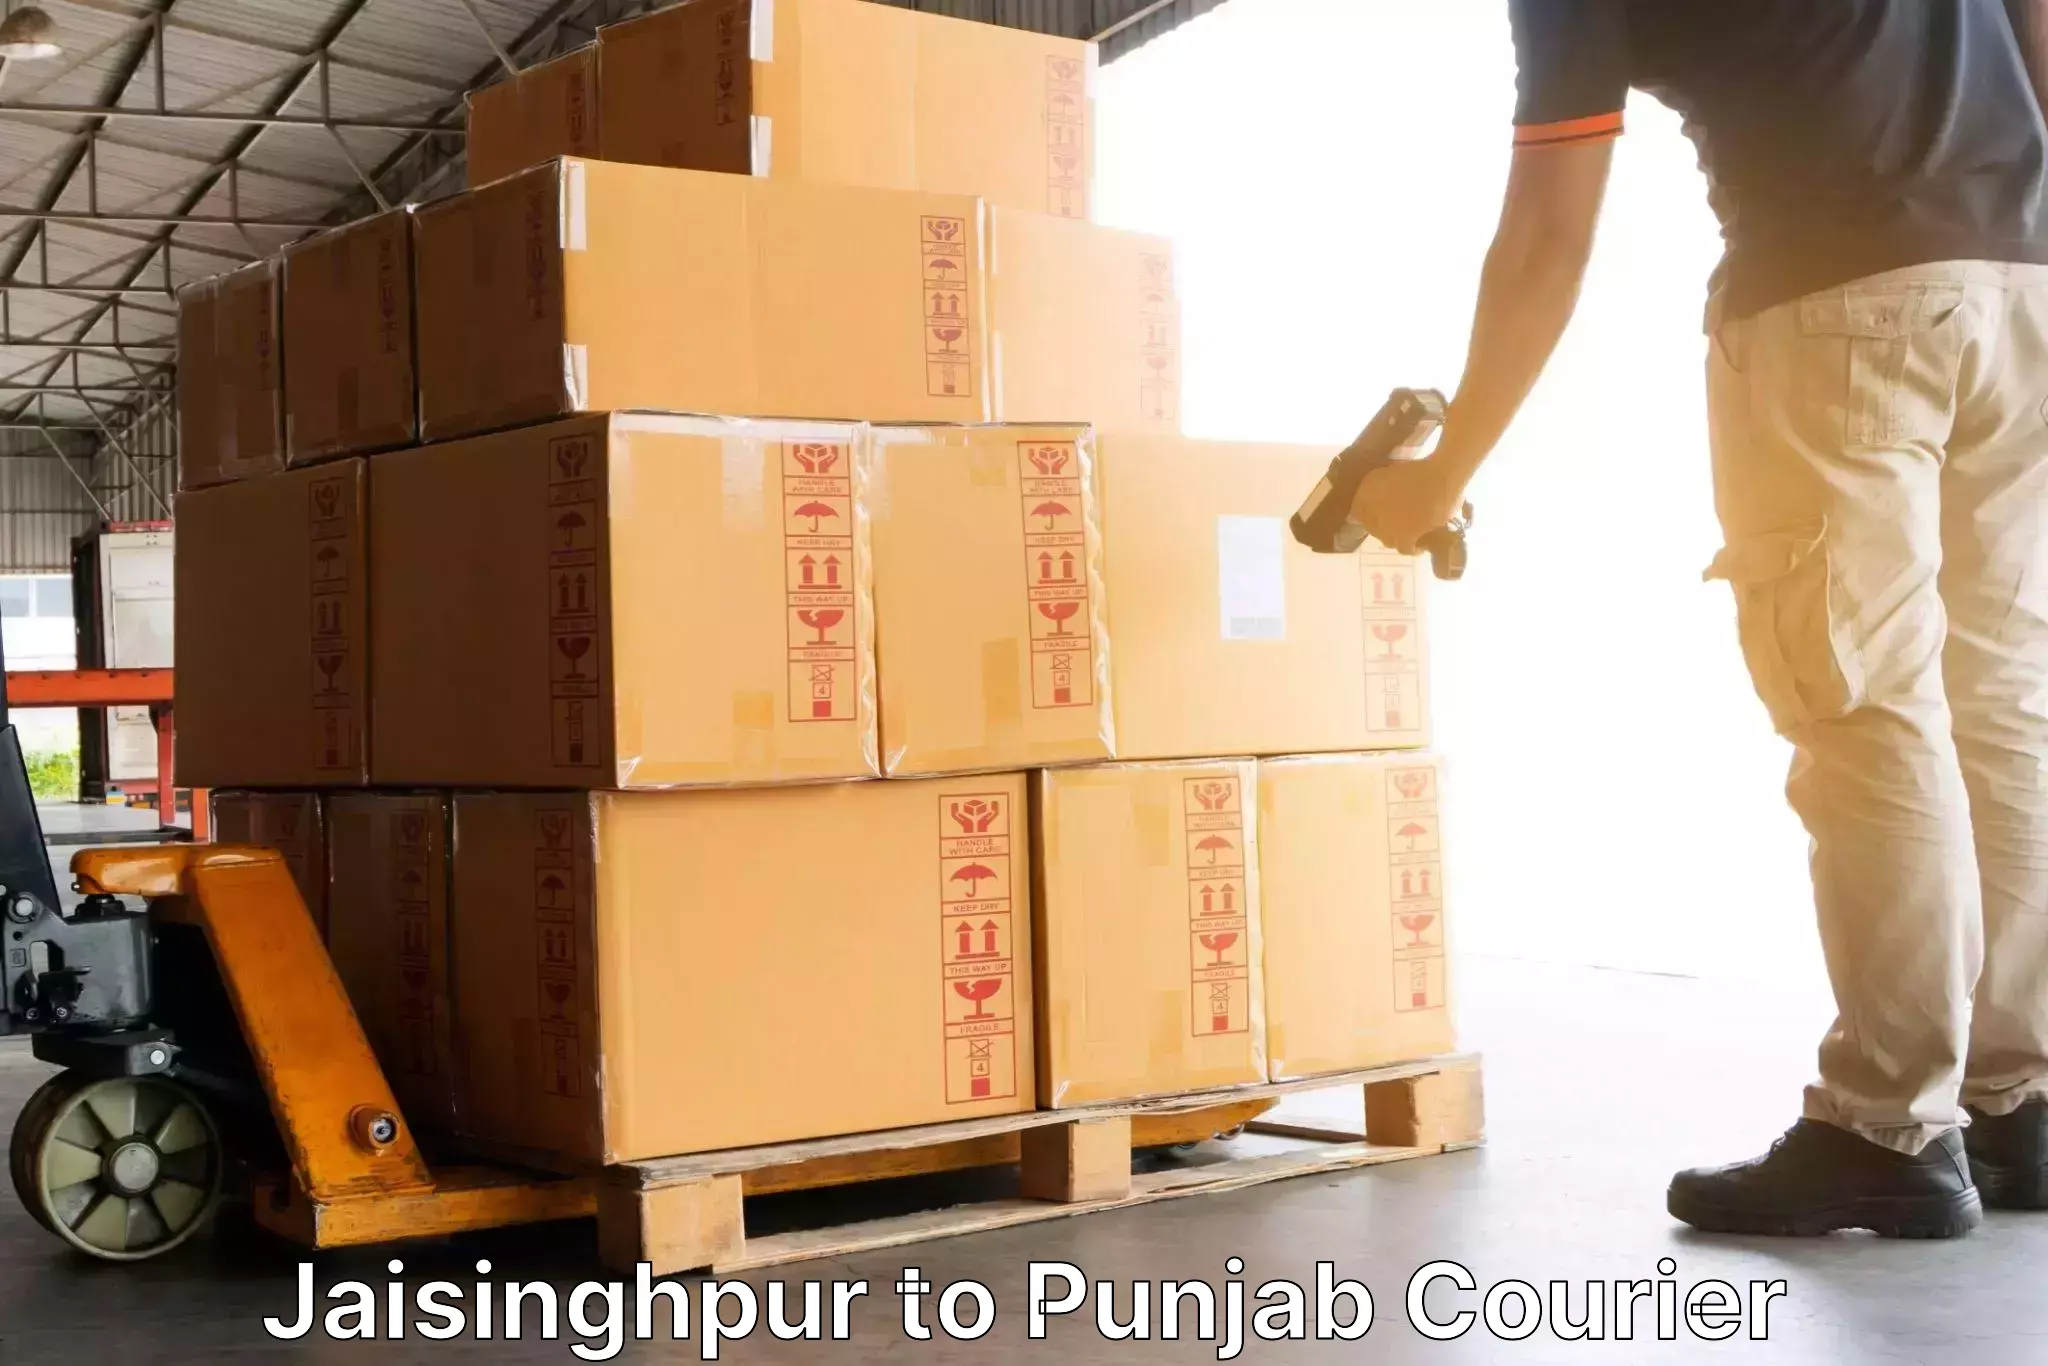 Supply chain delivery Jaisinghpur to Dhilwan